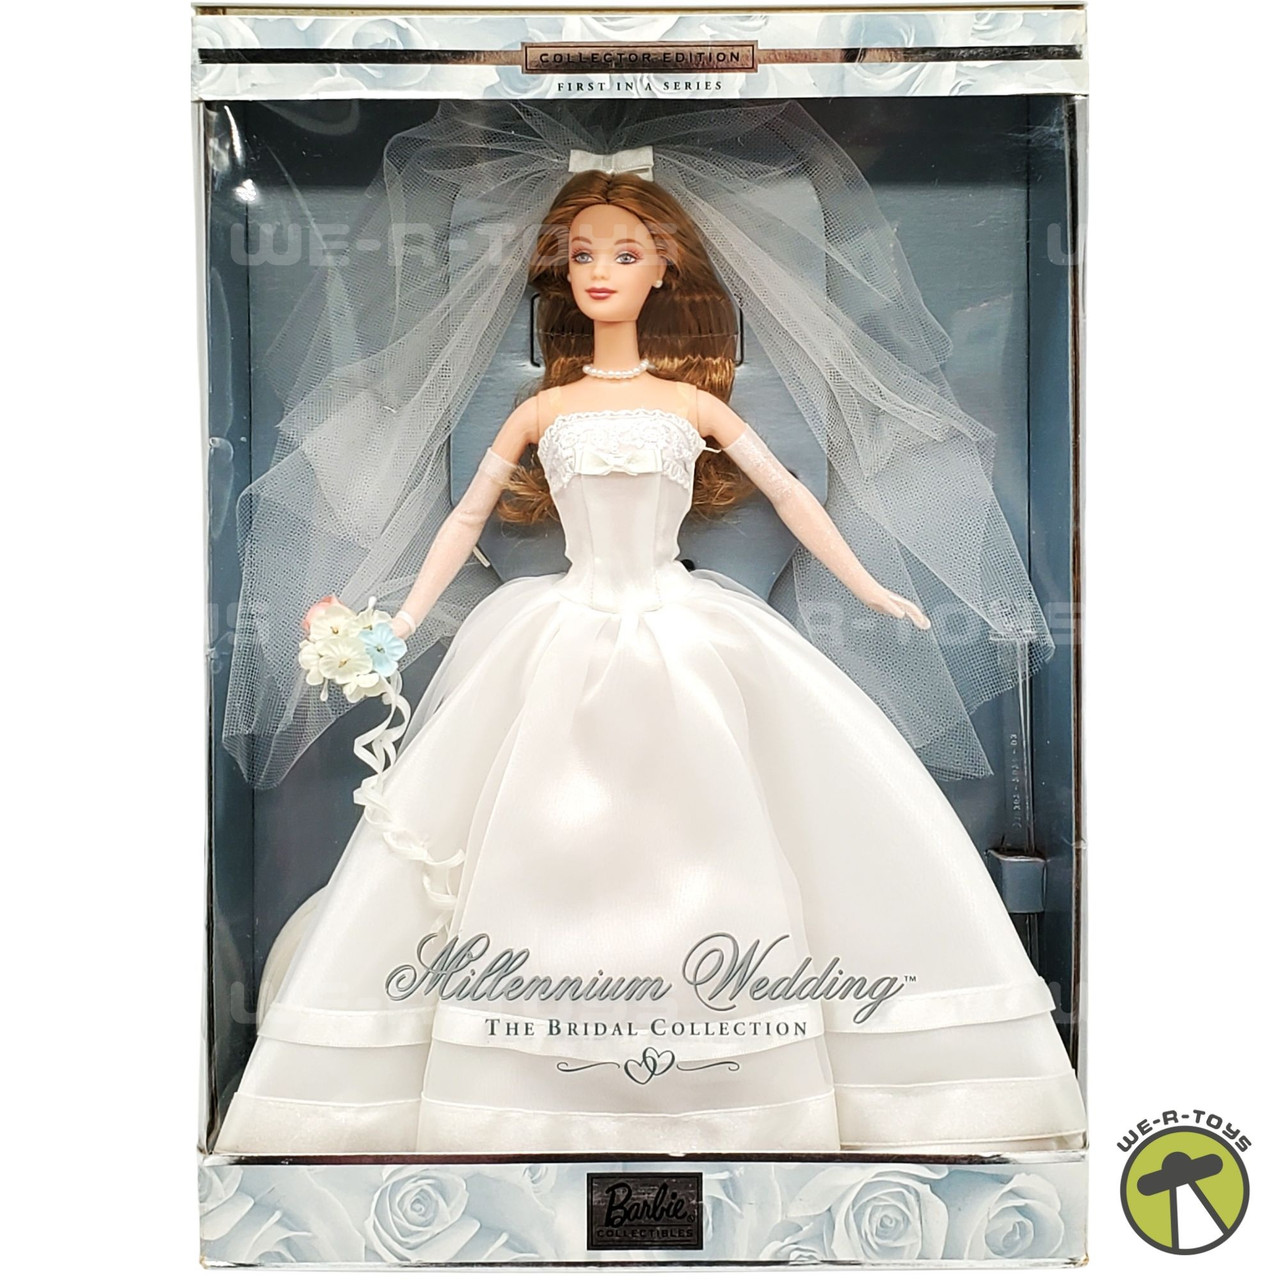 Millennium Wedding Barbie Doll The Bridal Collection 1999 Mattel